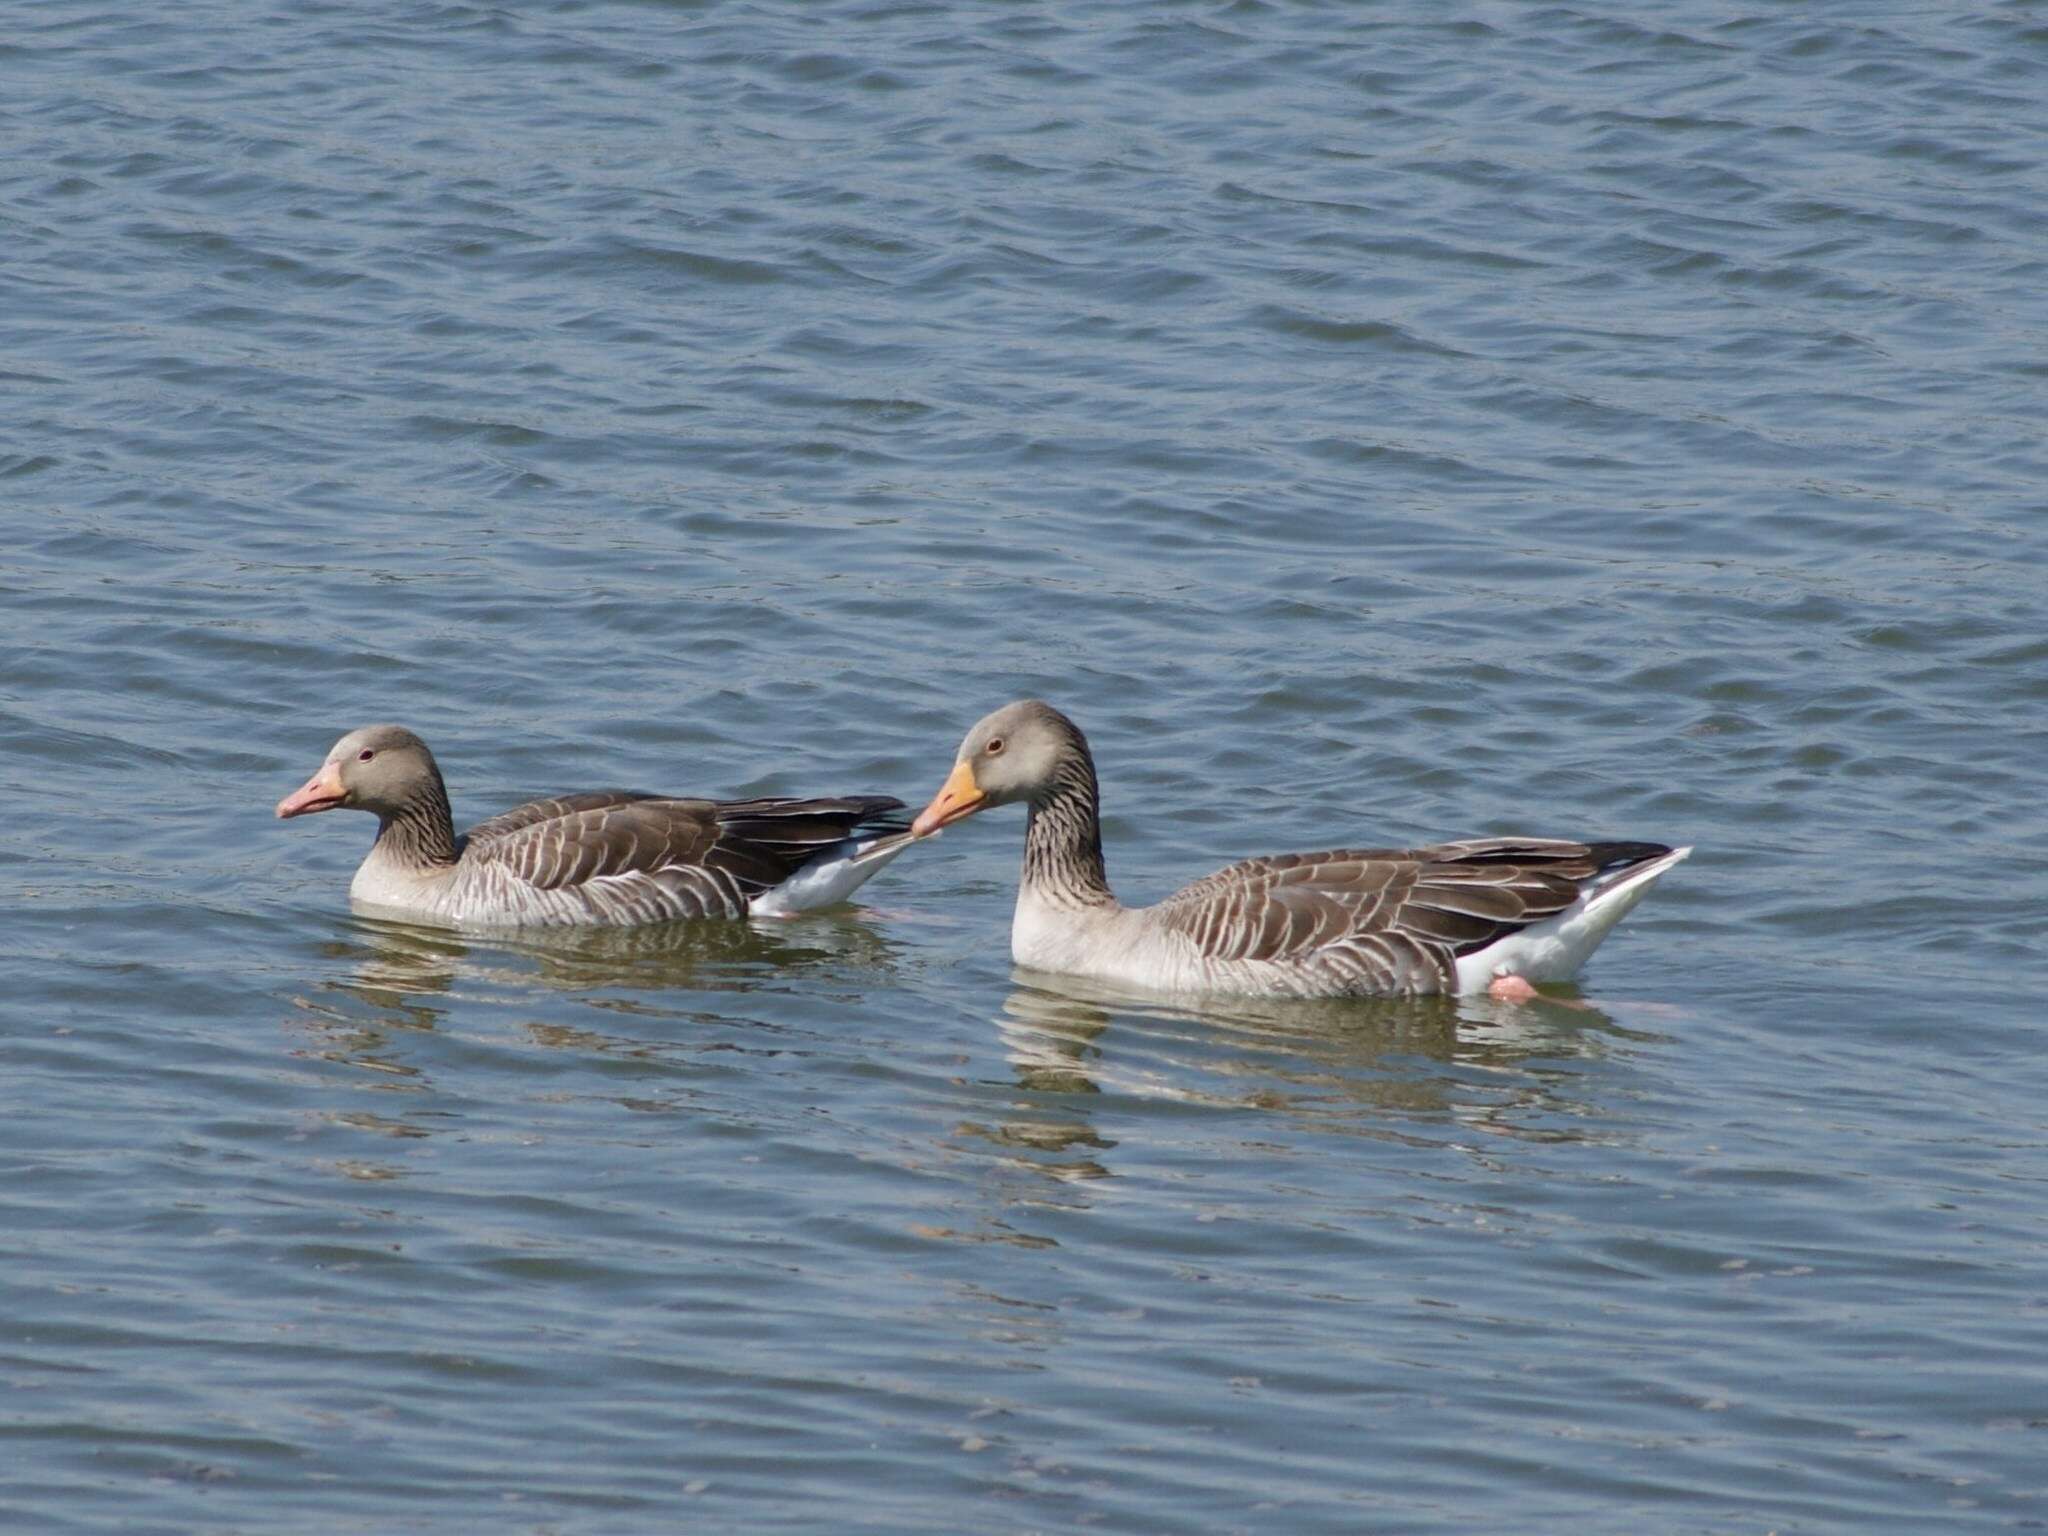 Image of Western Greylag Goose